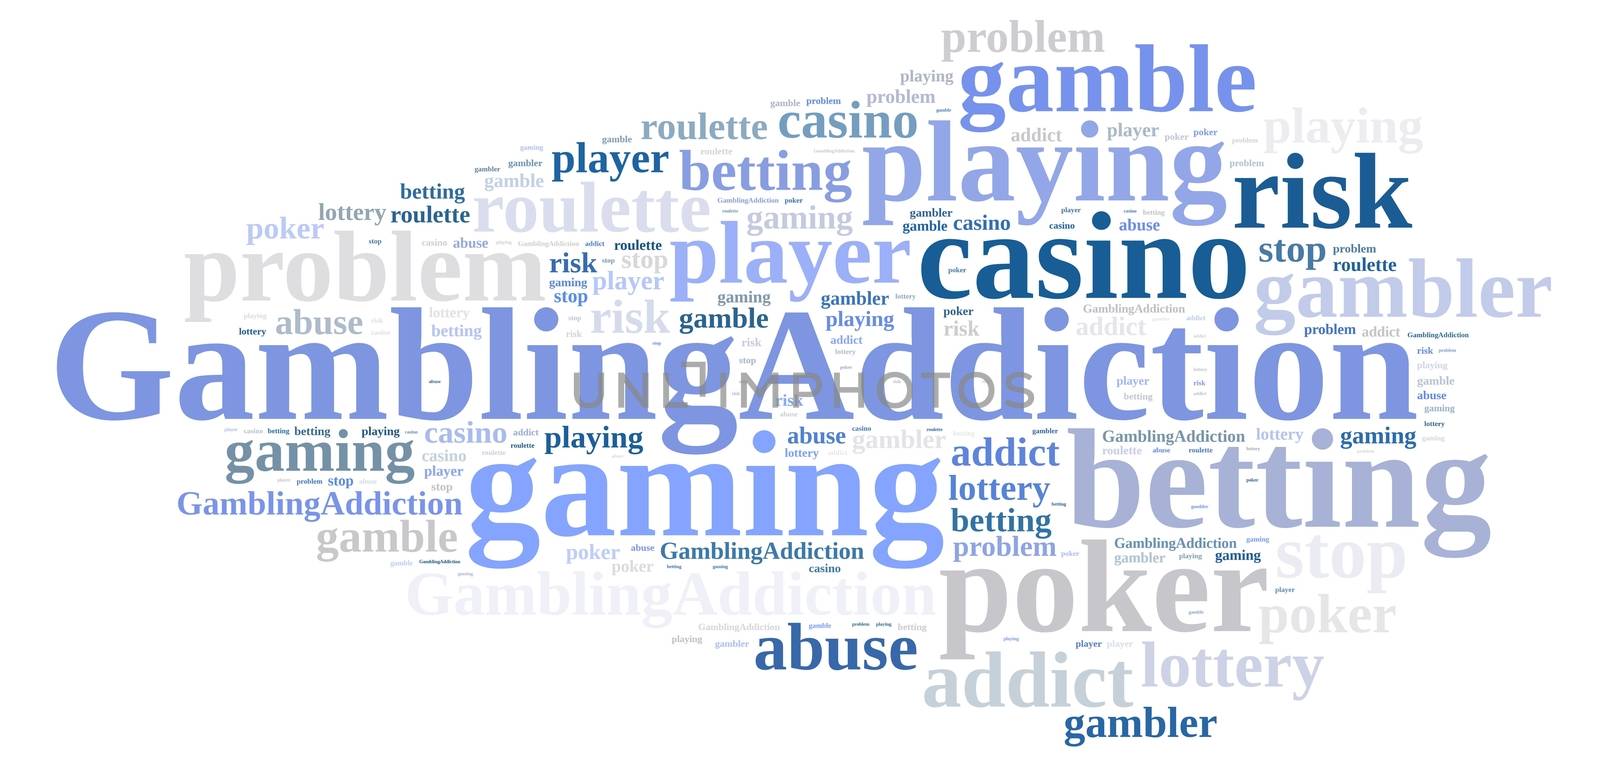 Gambling addiction. by CreativePhotoSpain